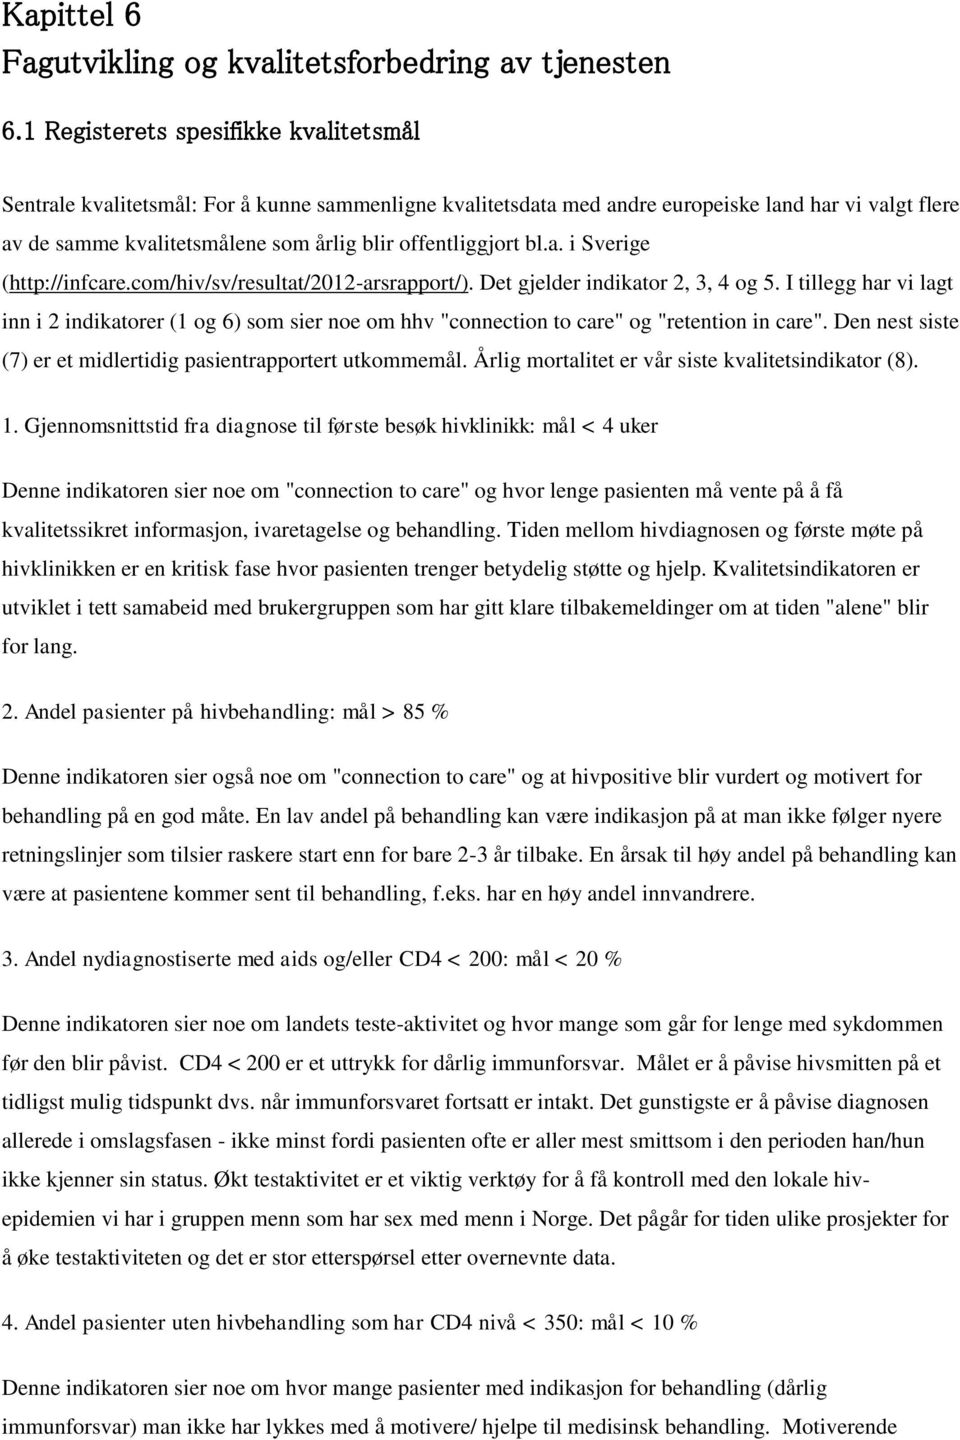 offentliggjort bl.a. i Sverige (http://infcare.com/hiv/sv/resultat/2012-arsrapport/). Det gjelder indikator 2, 3, 4 og 5.